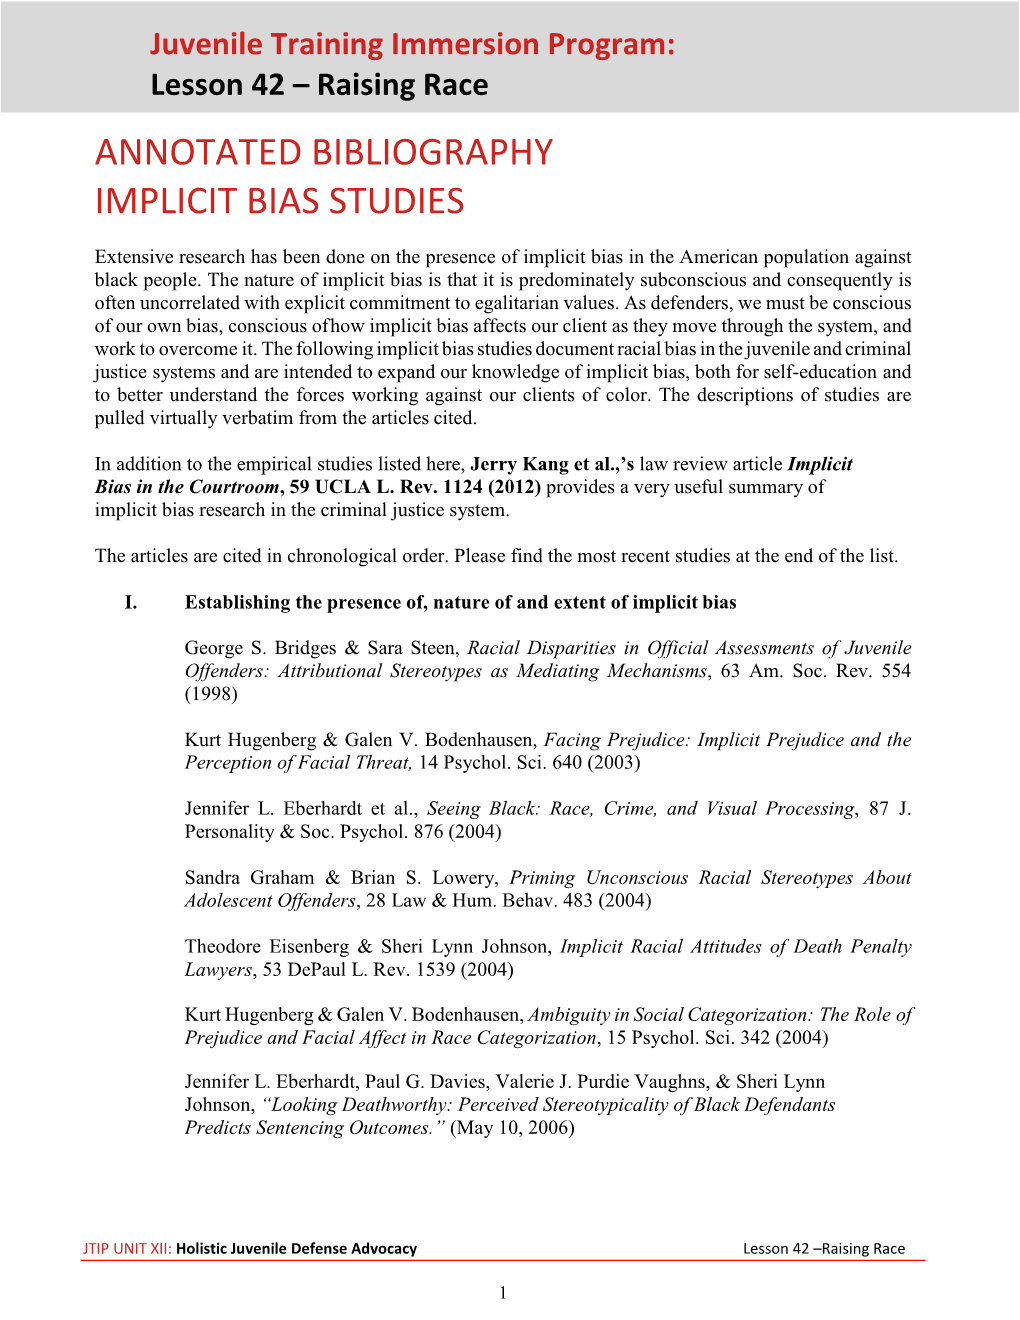 Annotated Bibliography Implicit Bias Studies